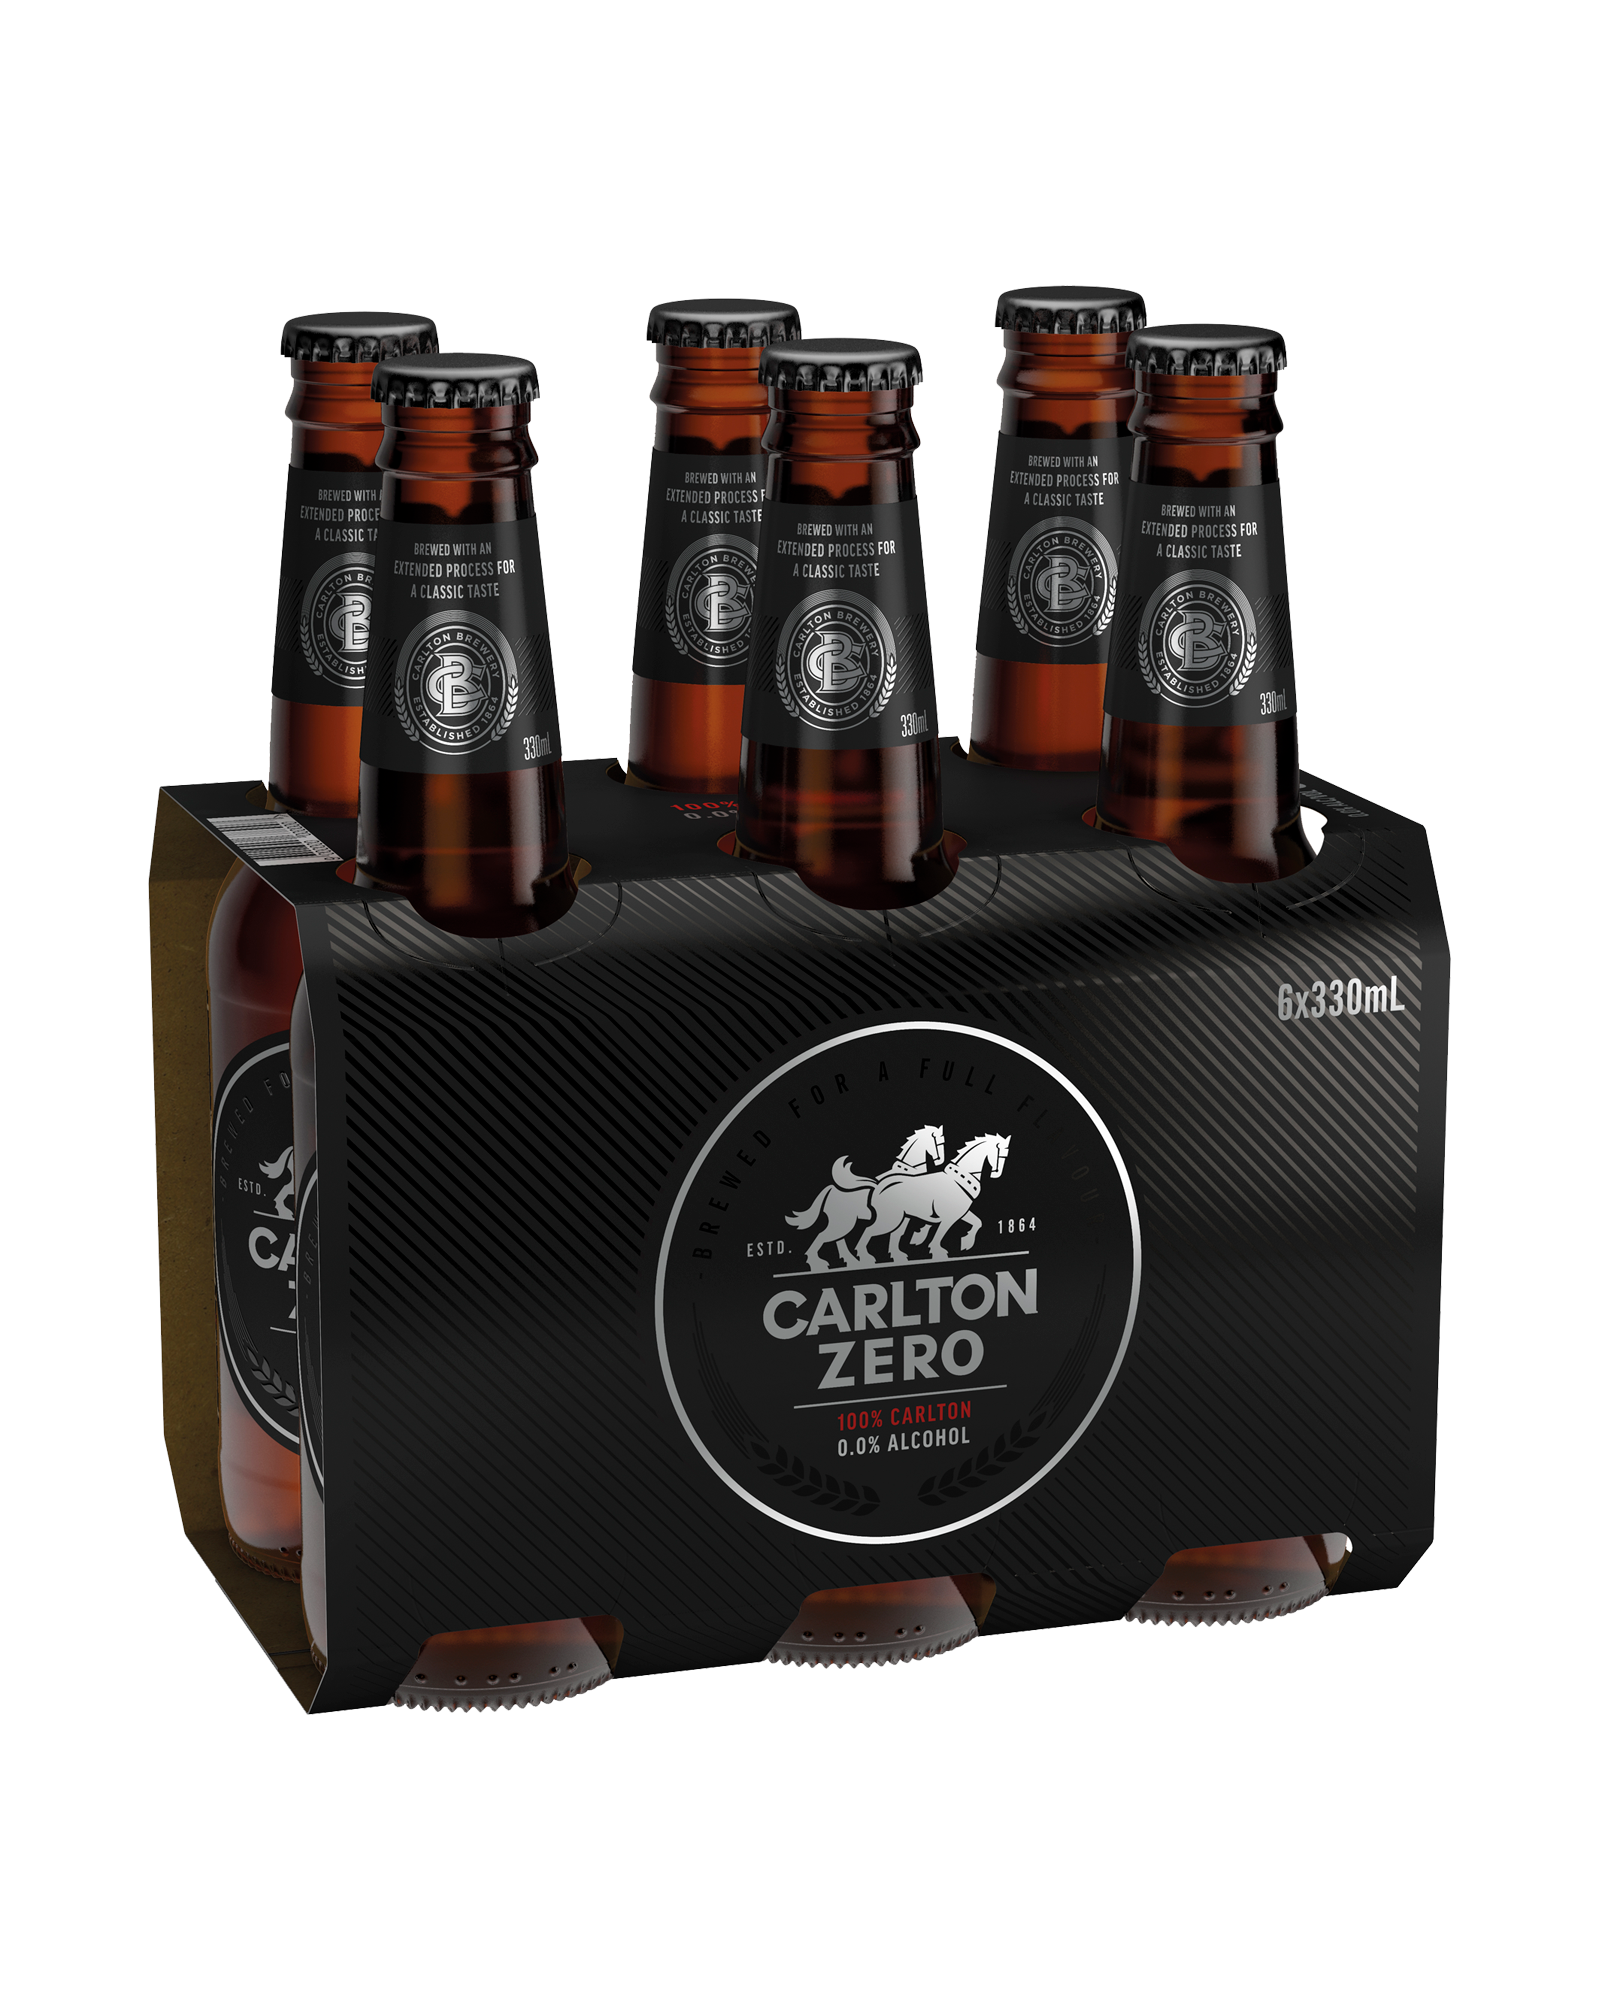 Carlton Zero Non Alcoholic Beer Bottles 330mL